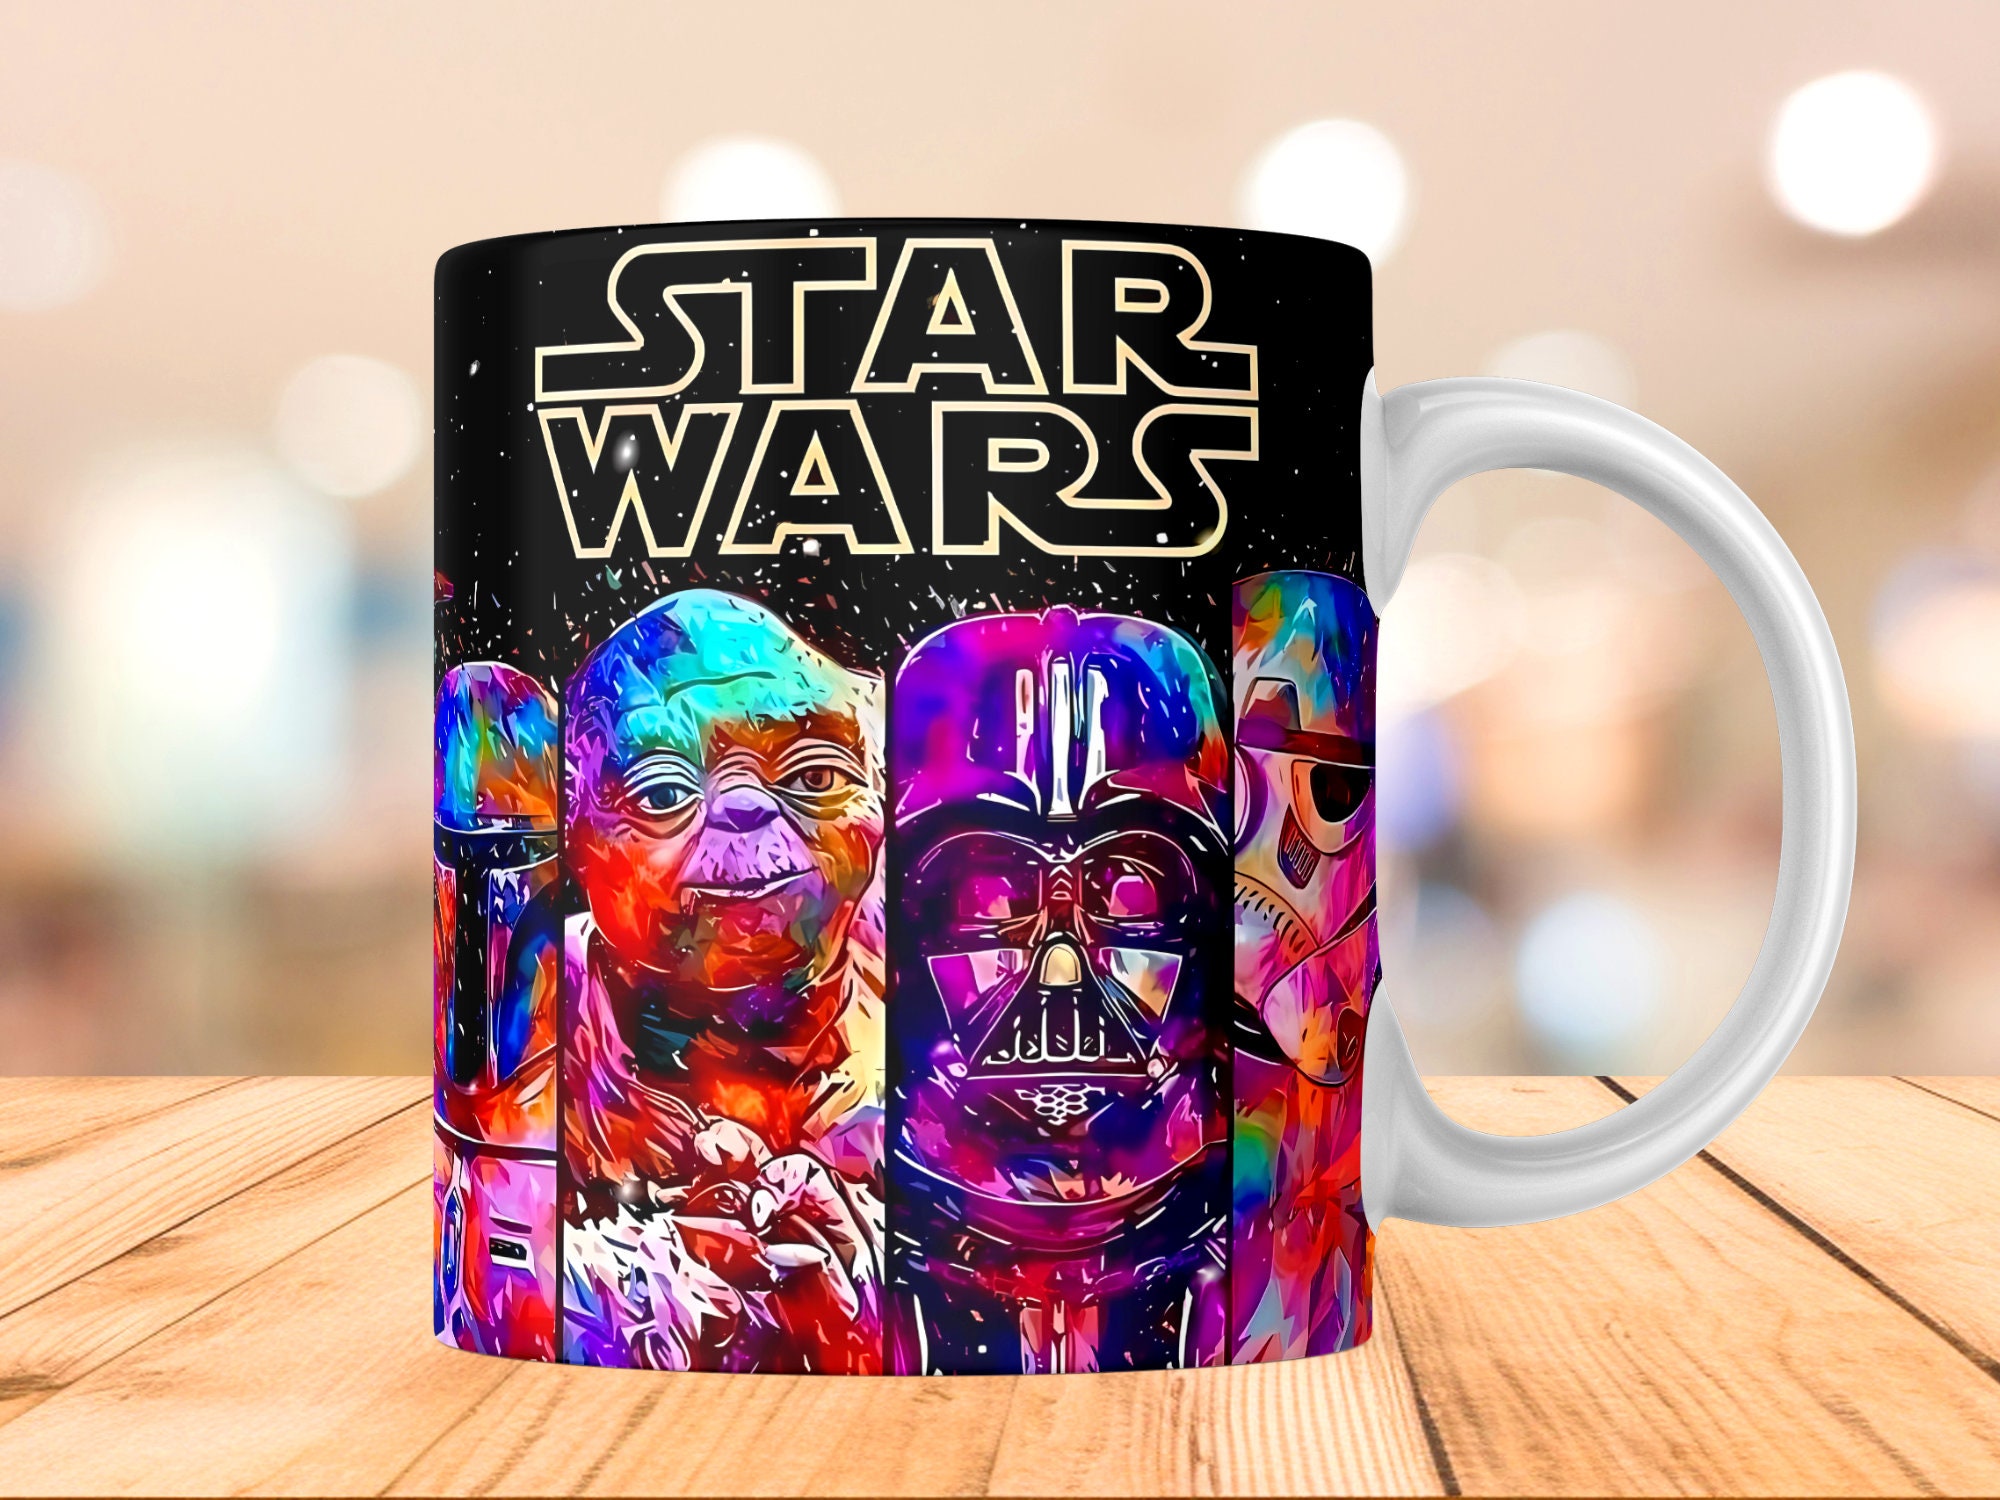 Official Star Wars Darth Vader Glass Mug / Cup - Beer Water